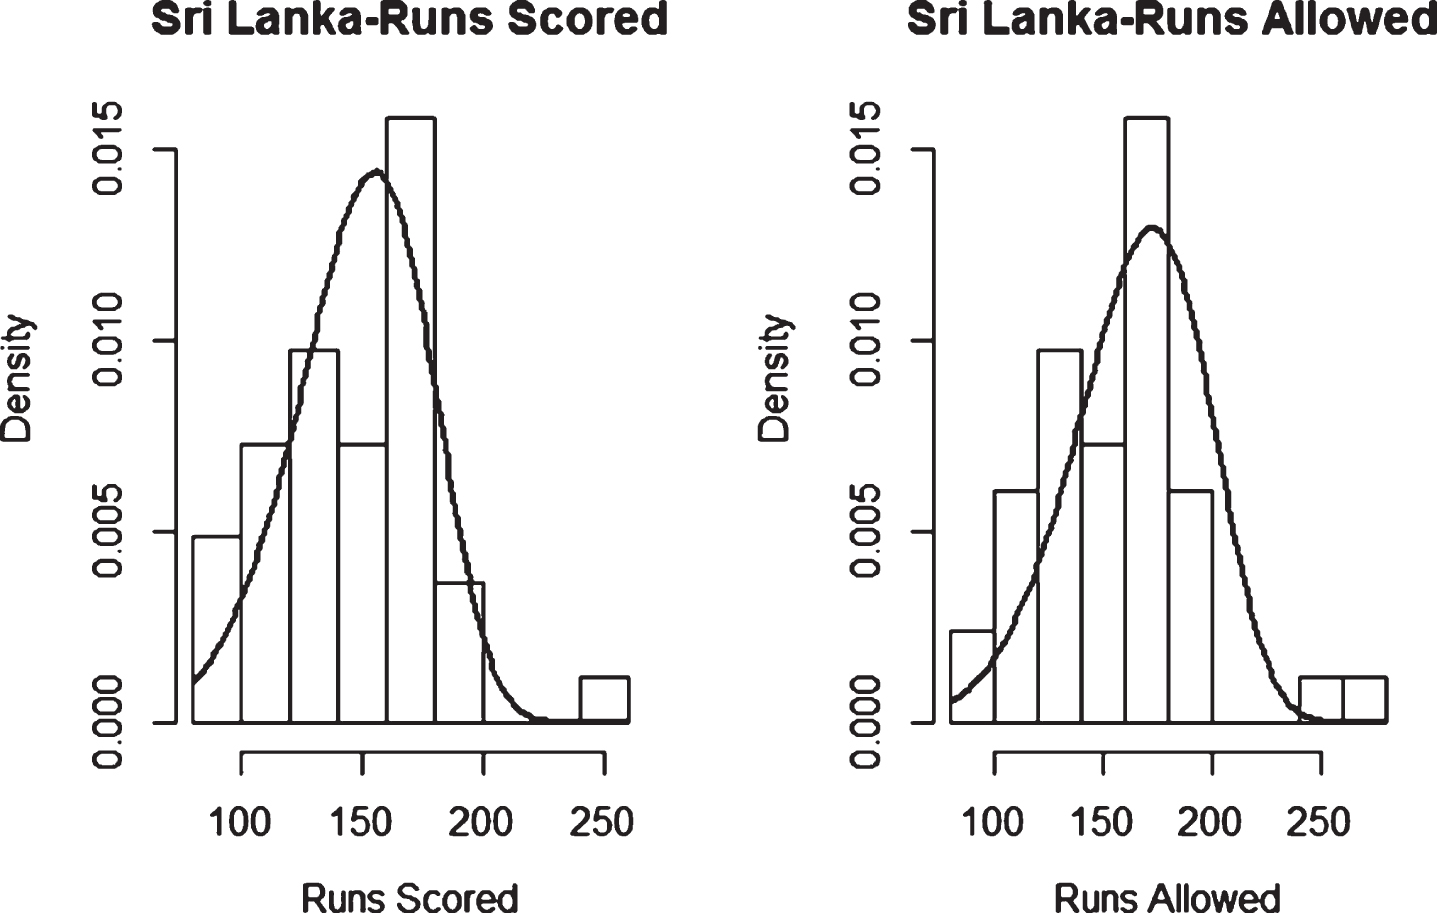 Weibull Distribution Fit for Runs Scored and Runs Allowed for Sri Lanka using Maximum Likelihood Method (Twenty20).